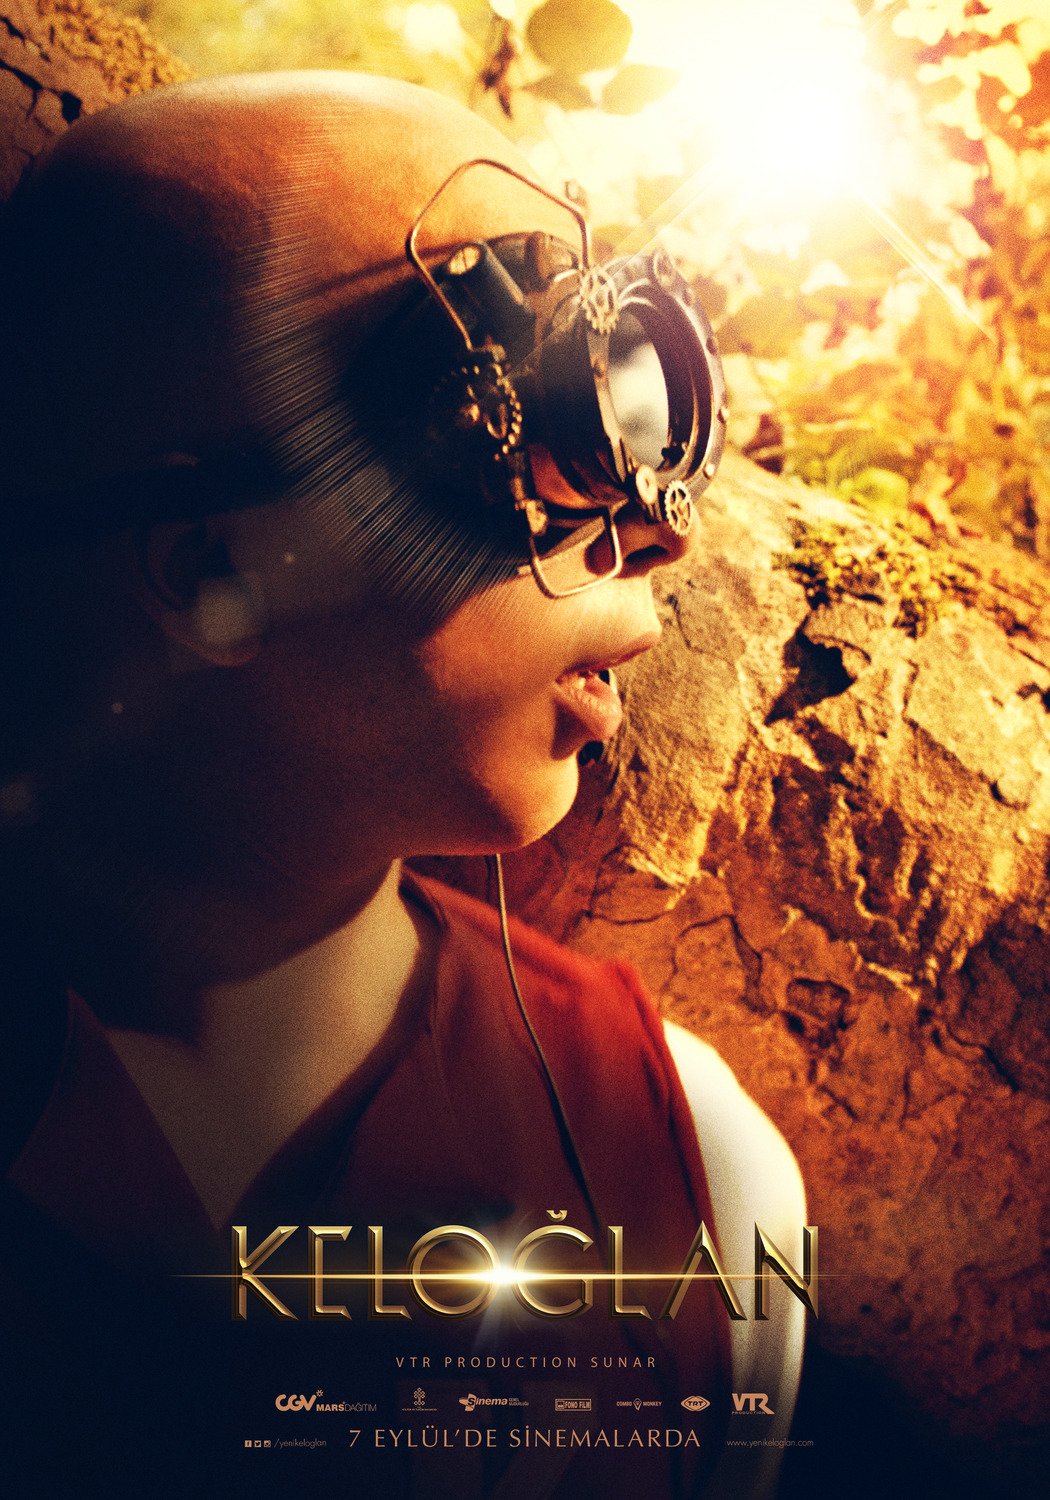 Extra Large Movie Poster Image for Keloglan (#6 of 6)